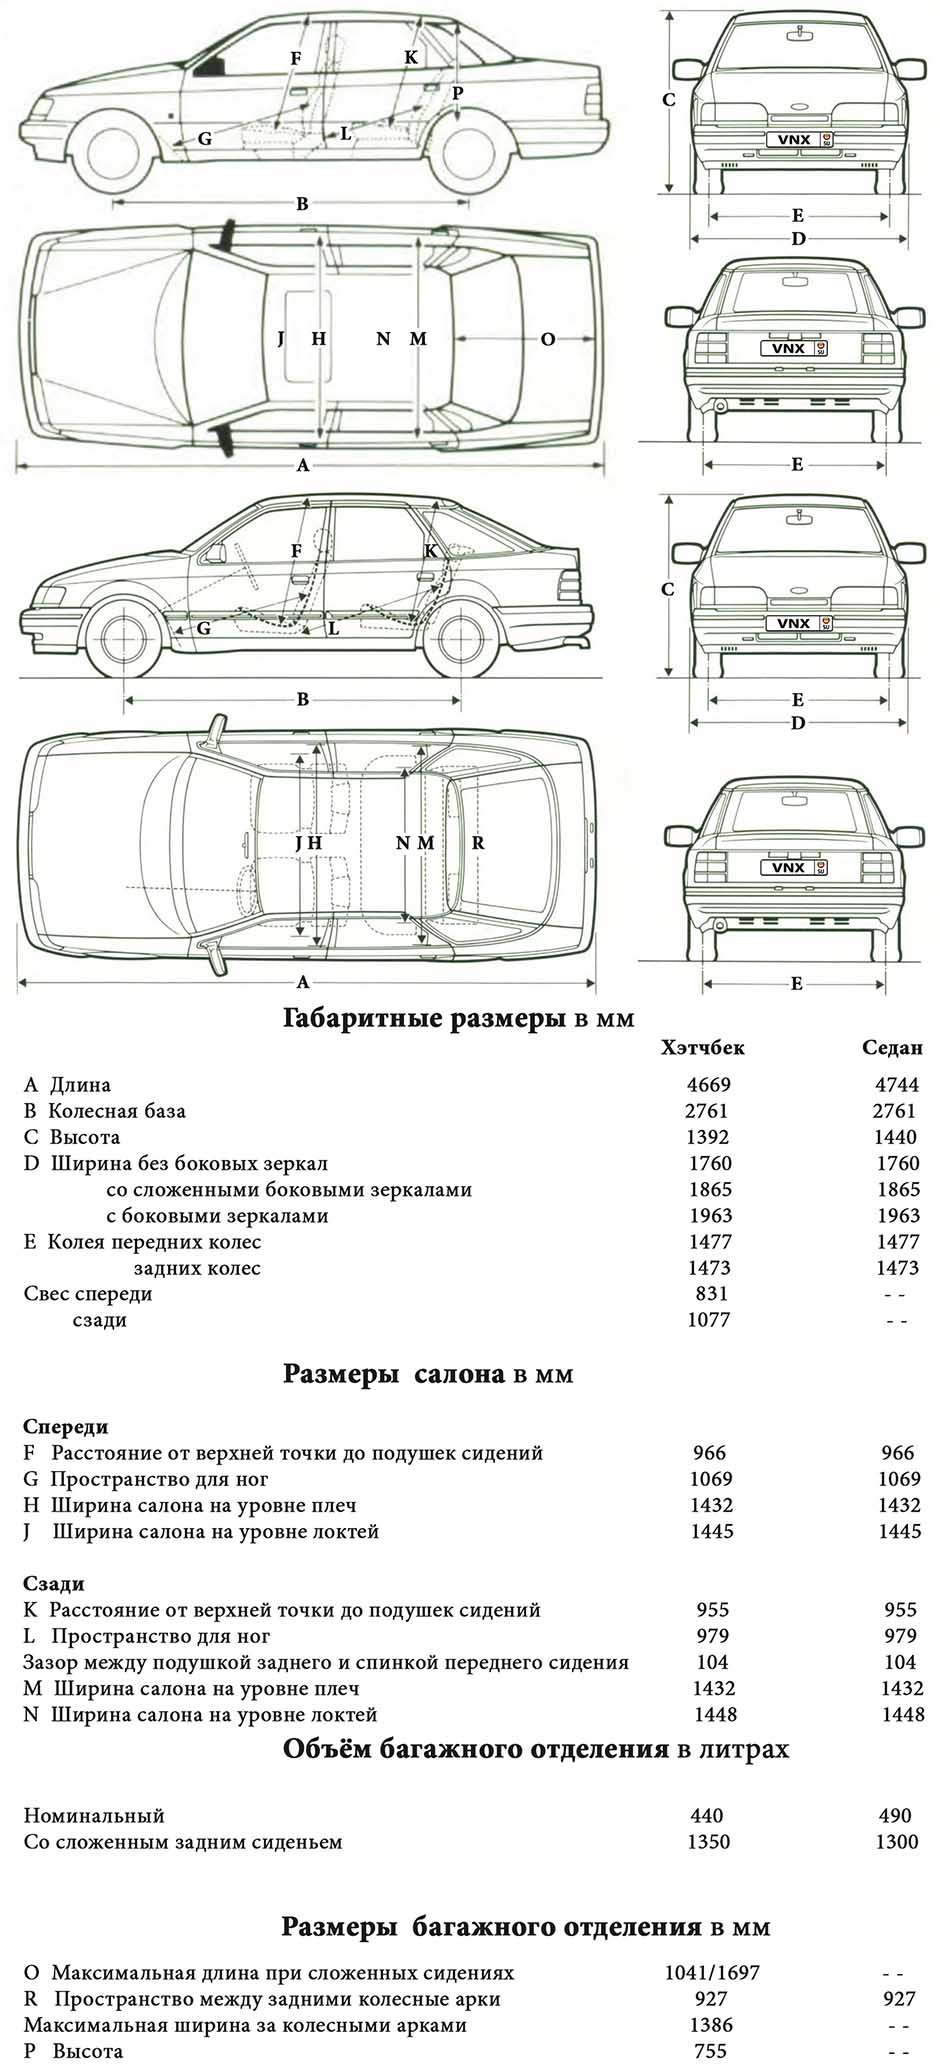 Габаритные размеры Форд Скорпио 1986-1992 (dimensions Ford Scorpio mk1)